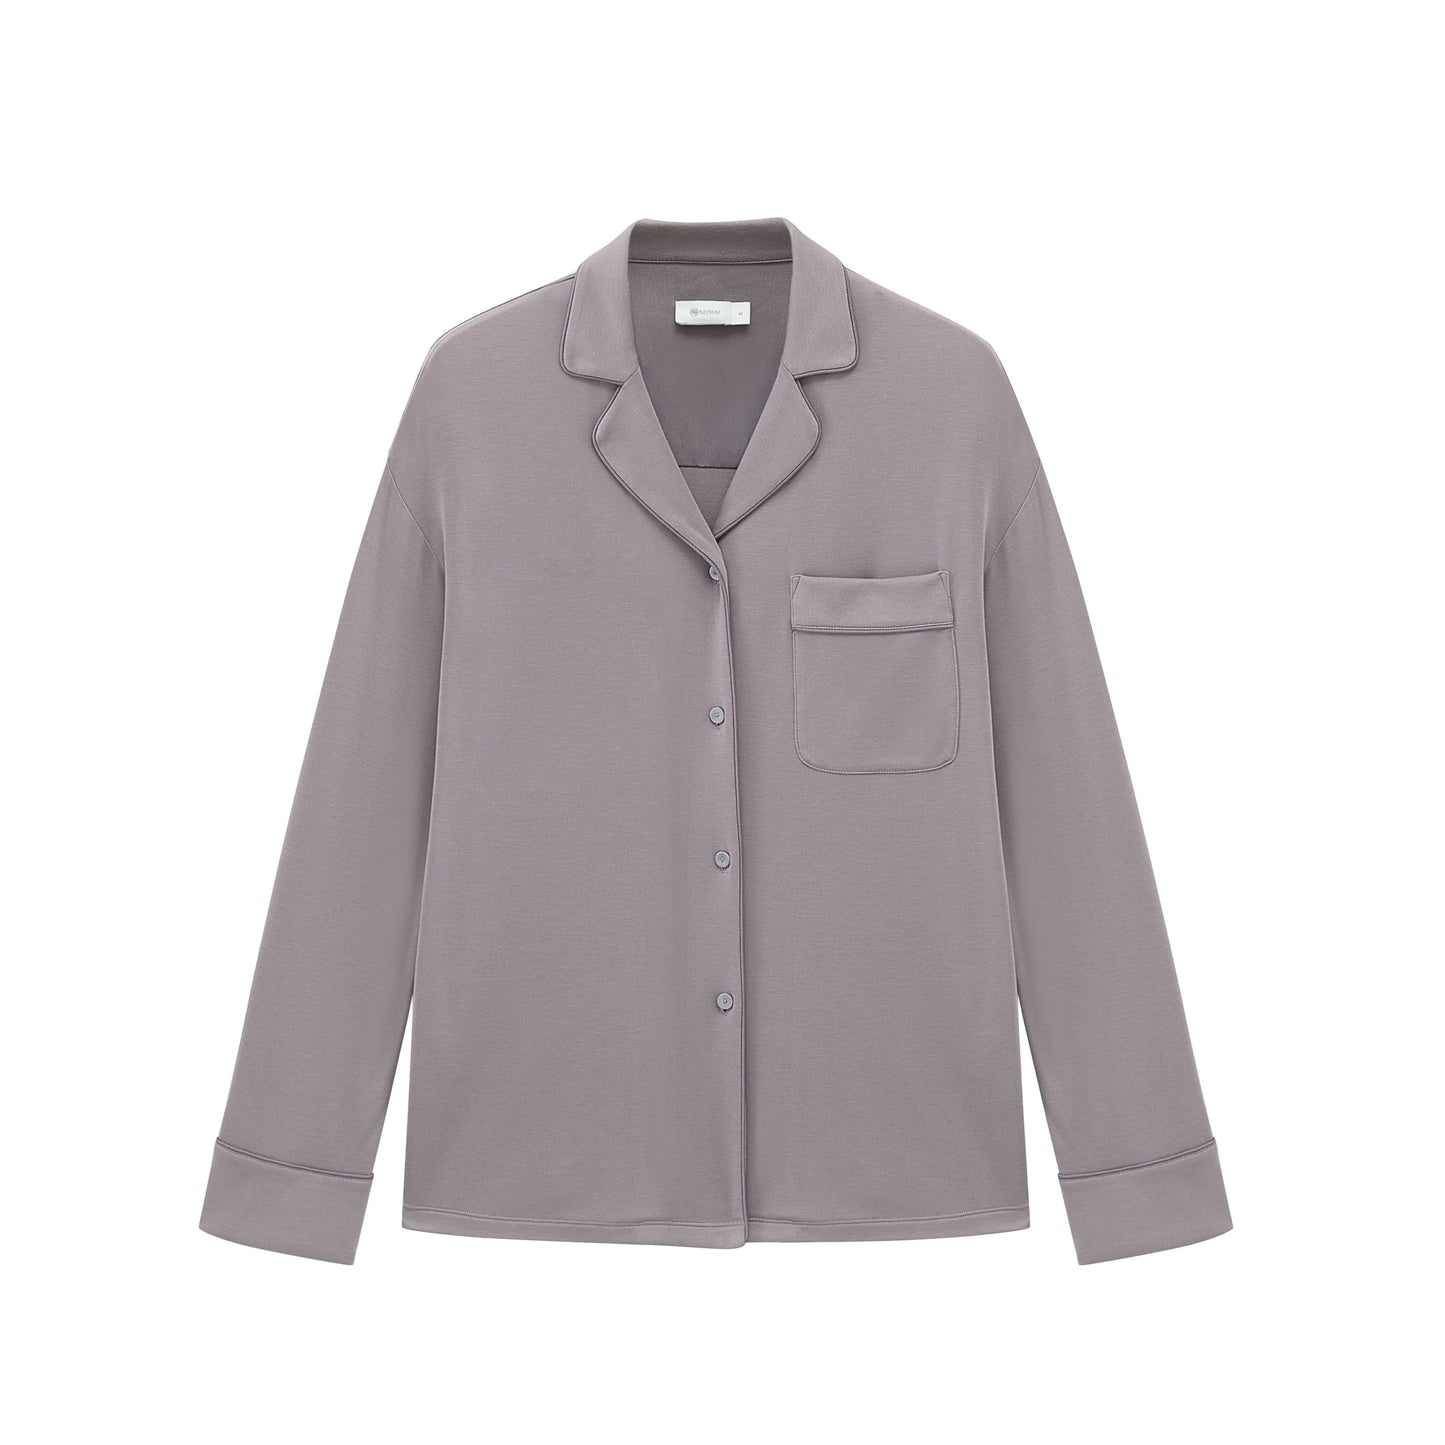 Flat lay image of light purple button up pajama shirt with pocket